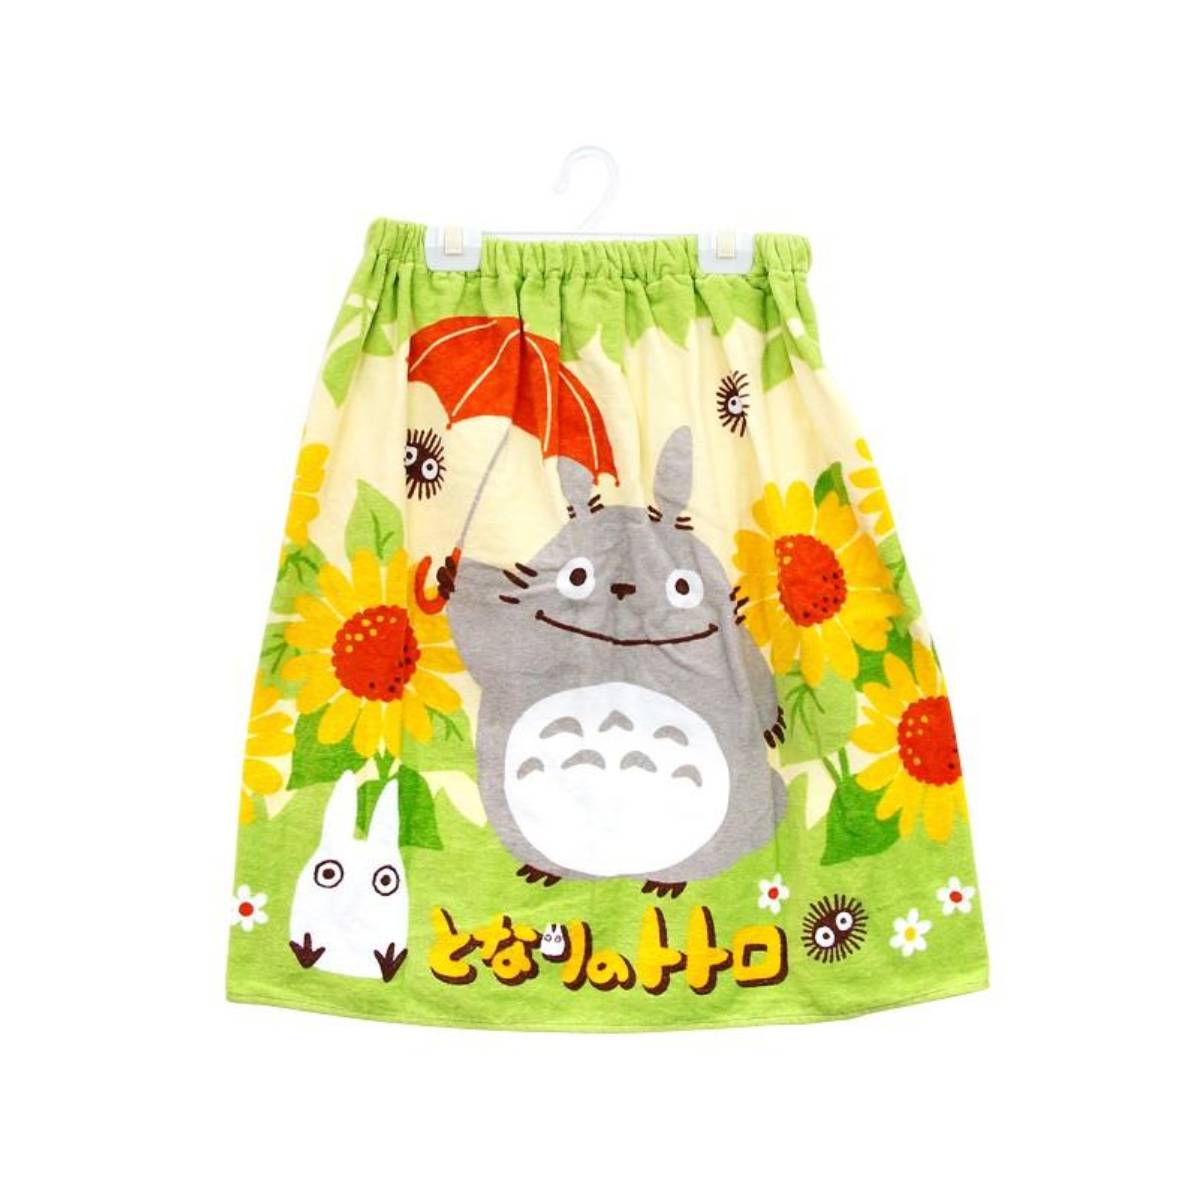 Wrap Towel - Totoro (Japan Edition)